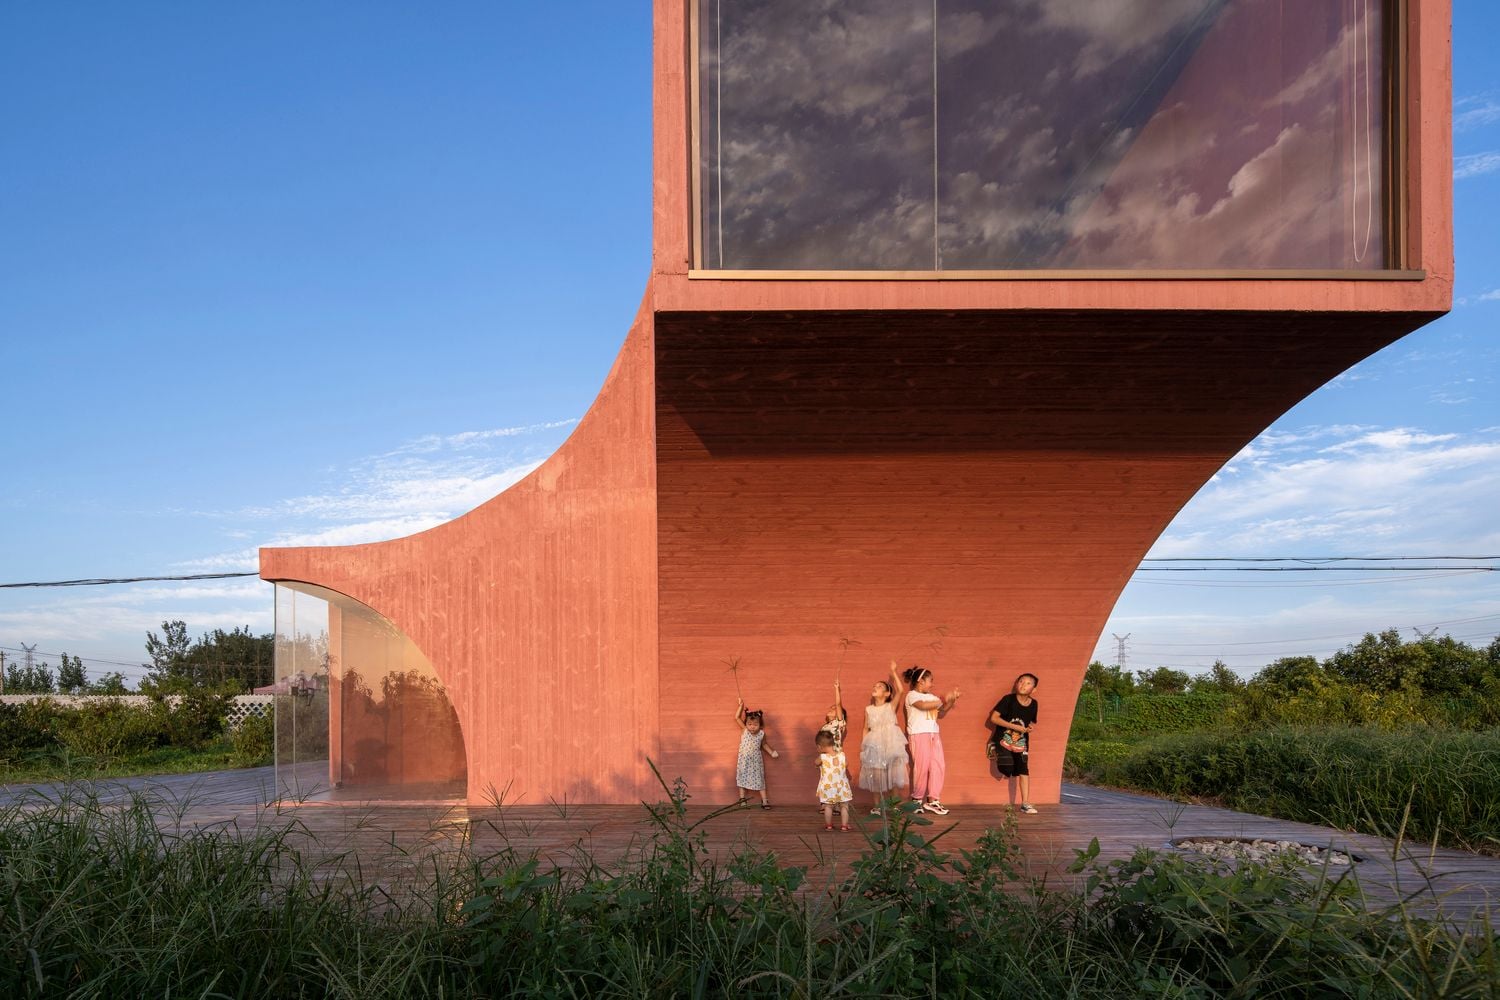 “Peach Hut” Brings Contemporary Architectural Geometries to Rural China